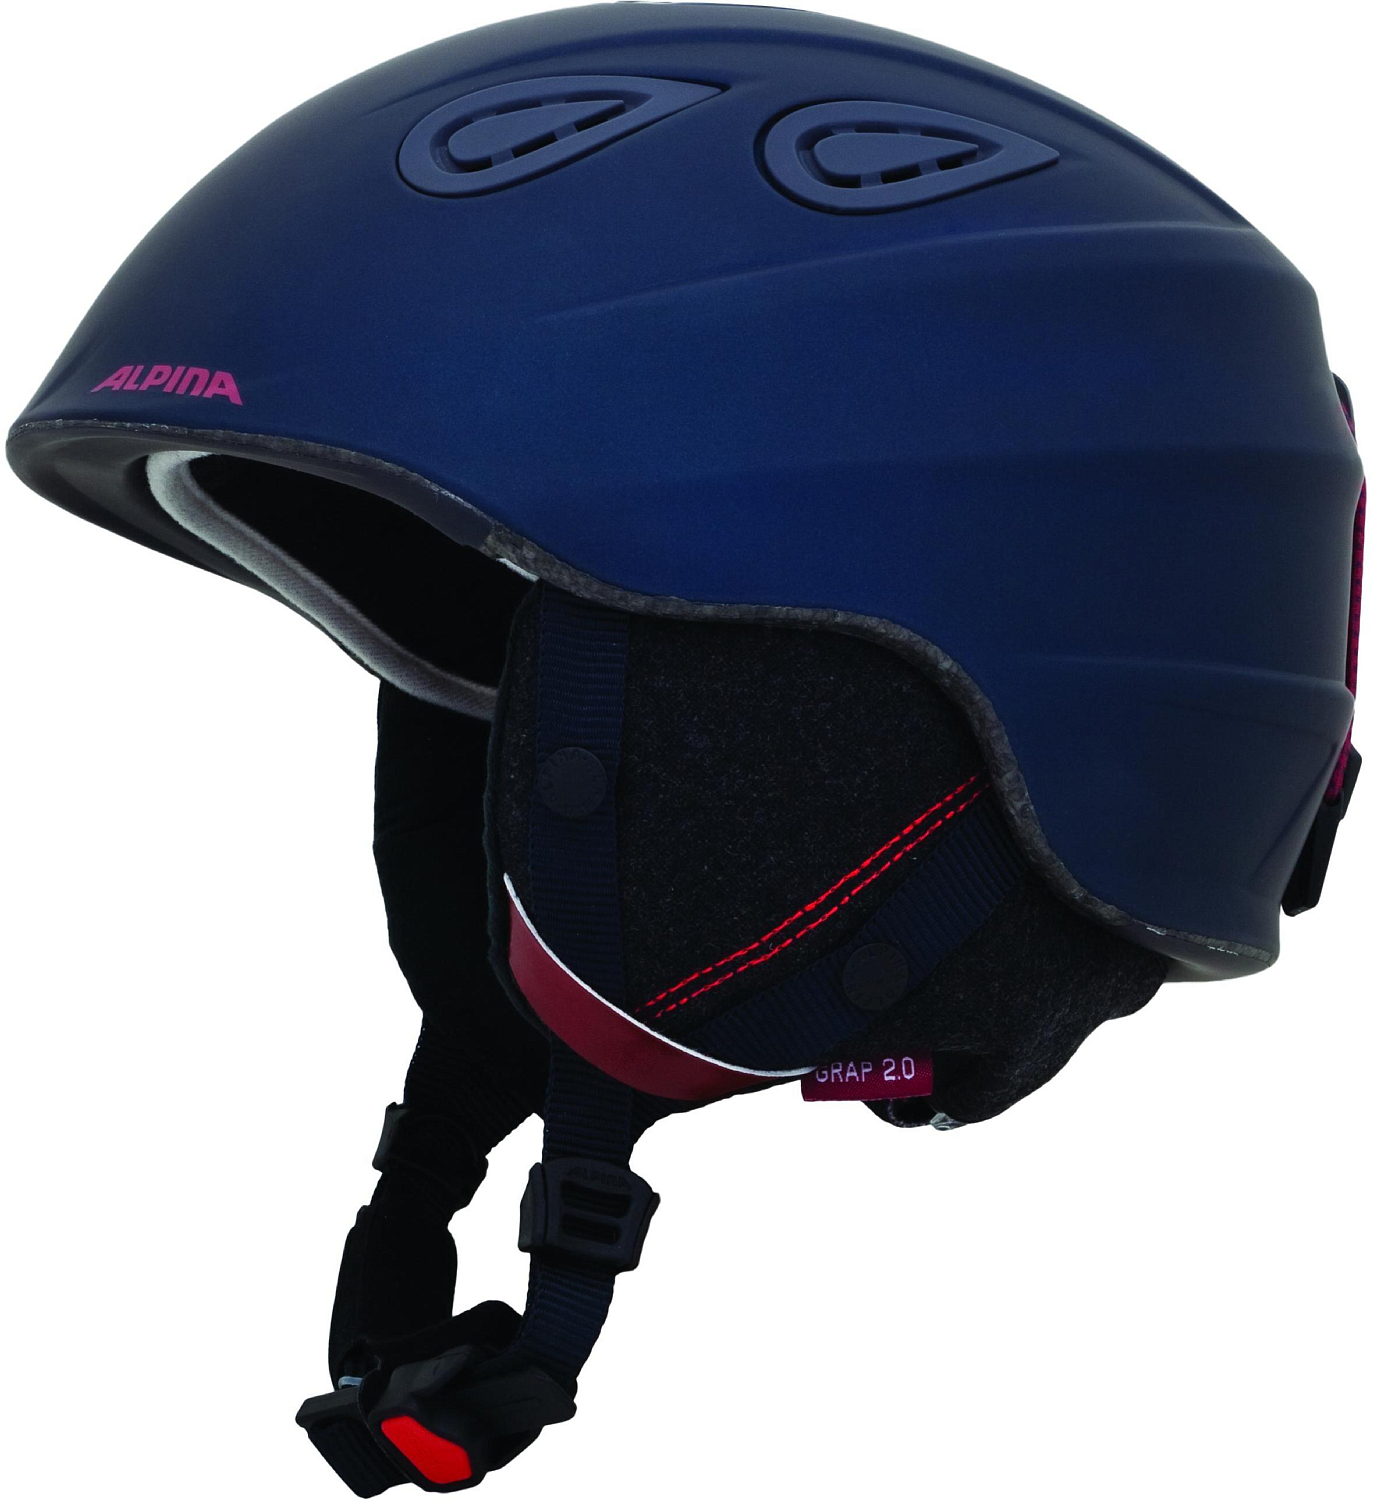 Зимний Шлем Alpina GRAP 2.0 LE nightblue-bordeaux matt